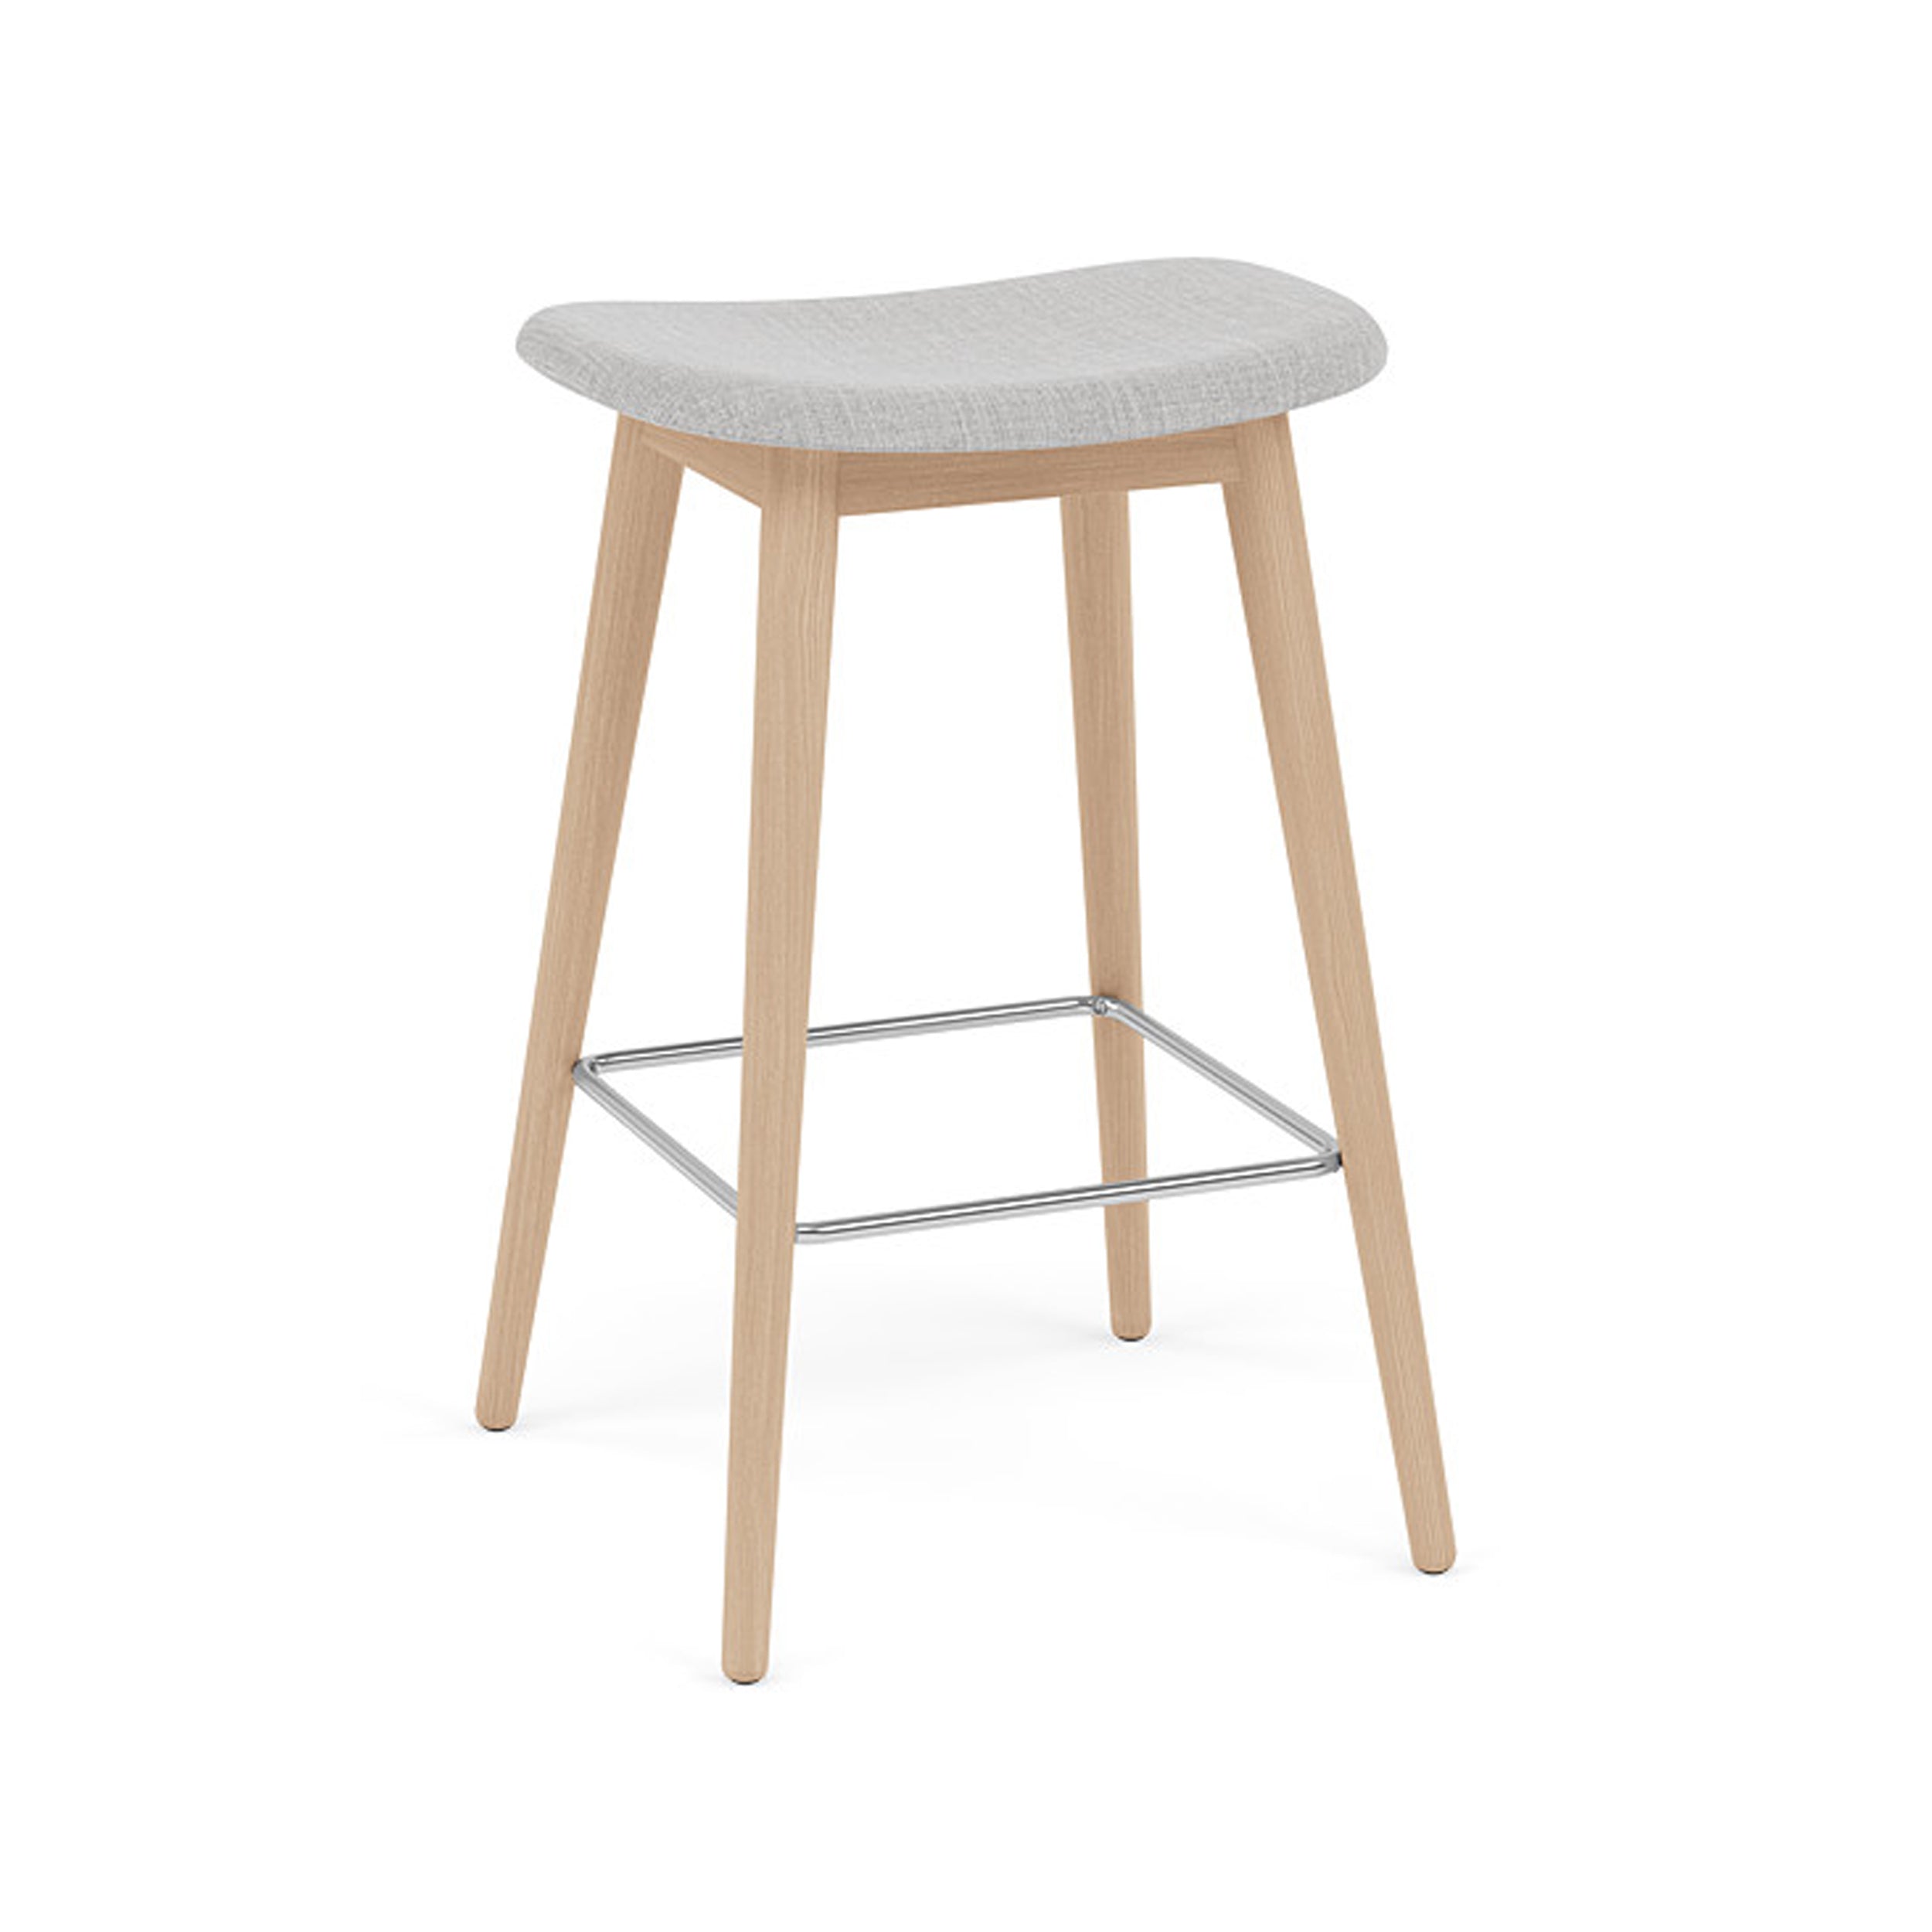 Fiber Bar + Counter Stool: Wood Base + Upholstered + Counter + Oak 